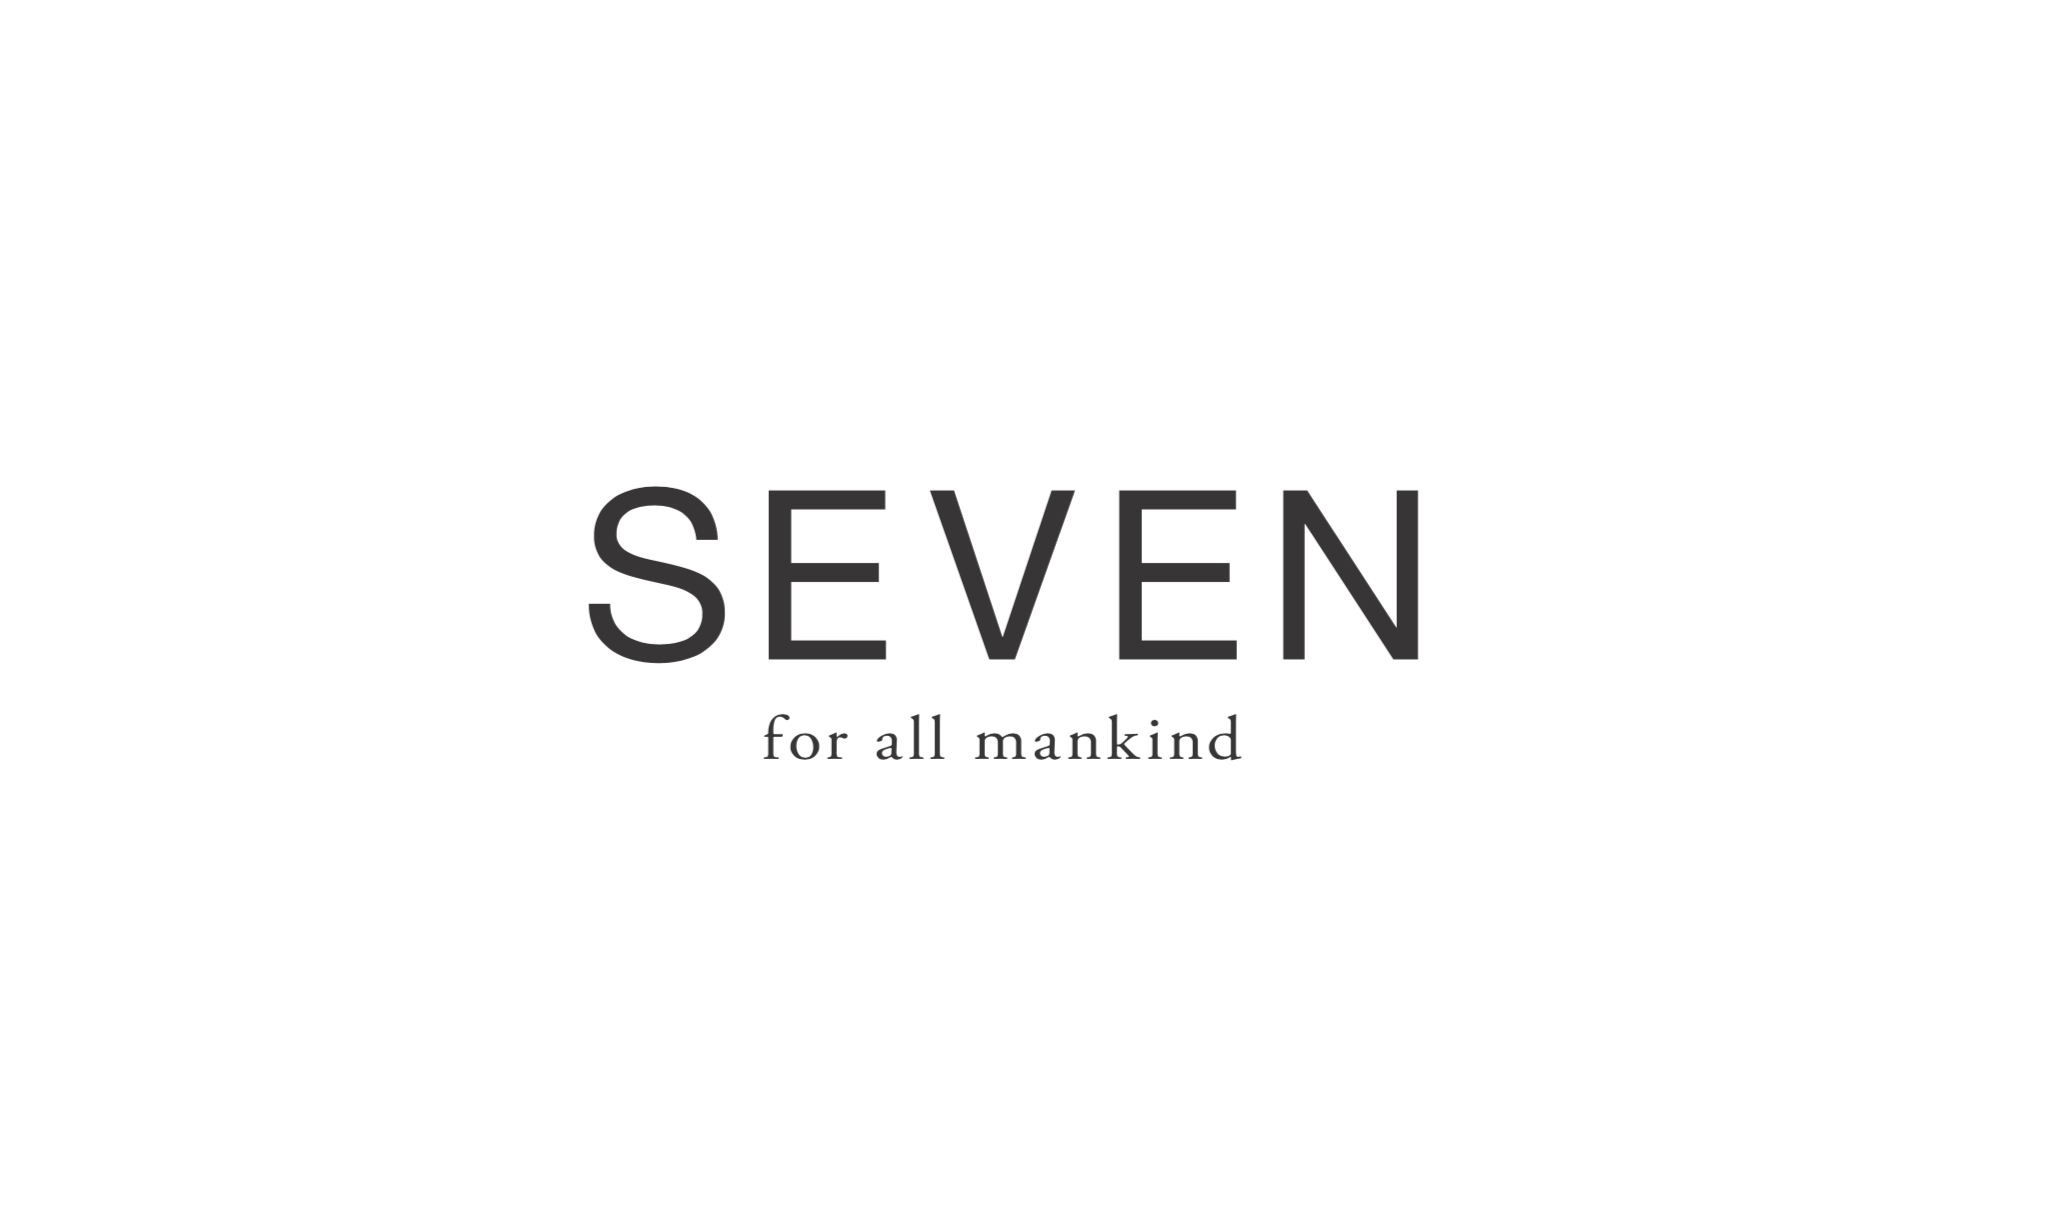 seven 4 mankind